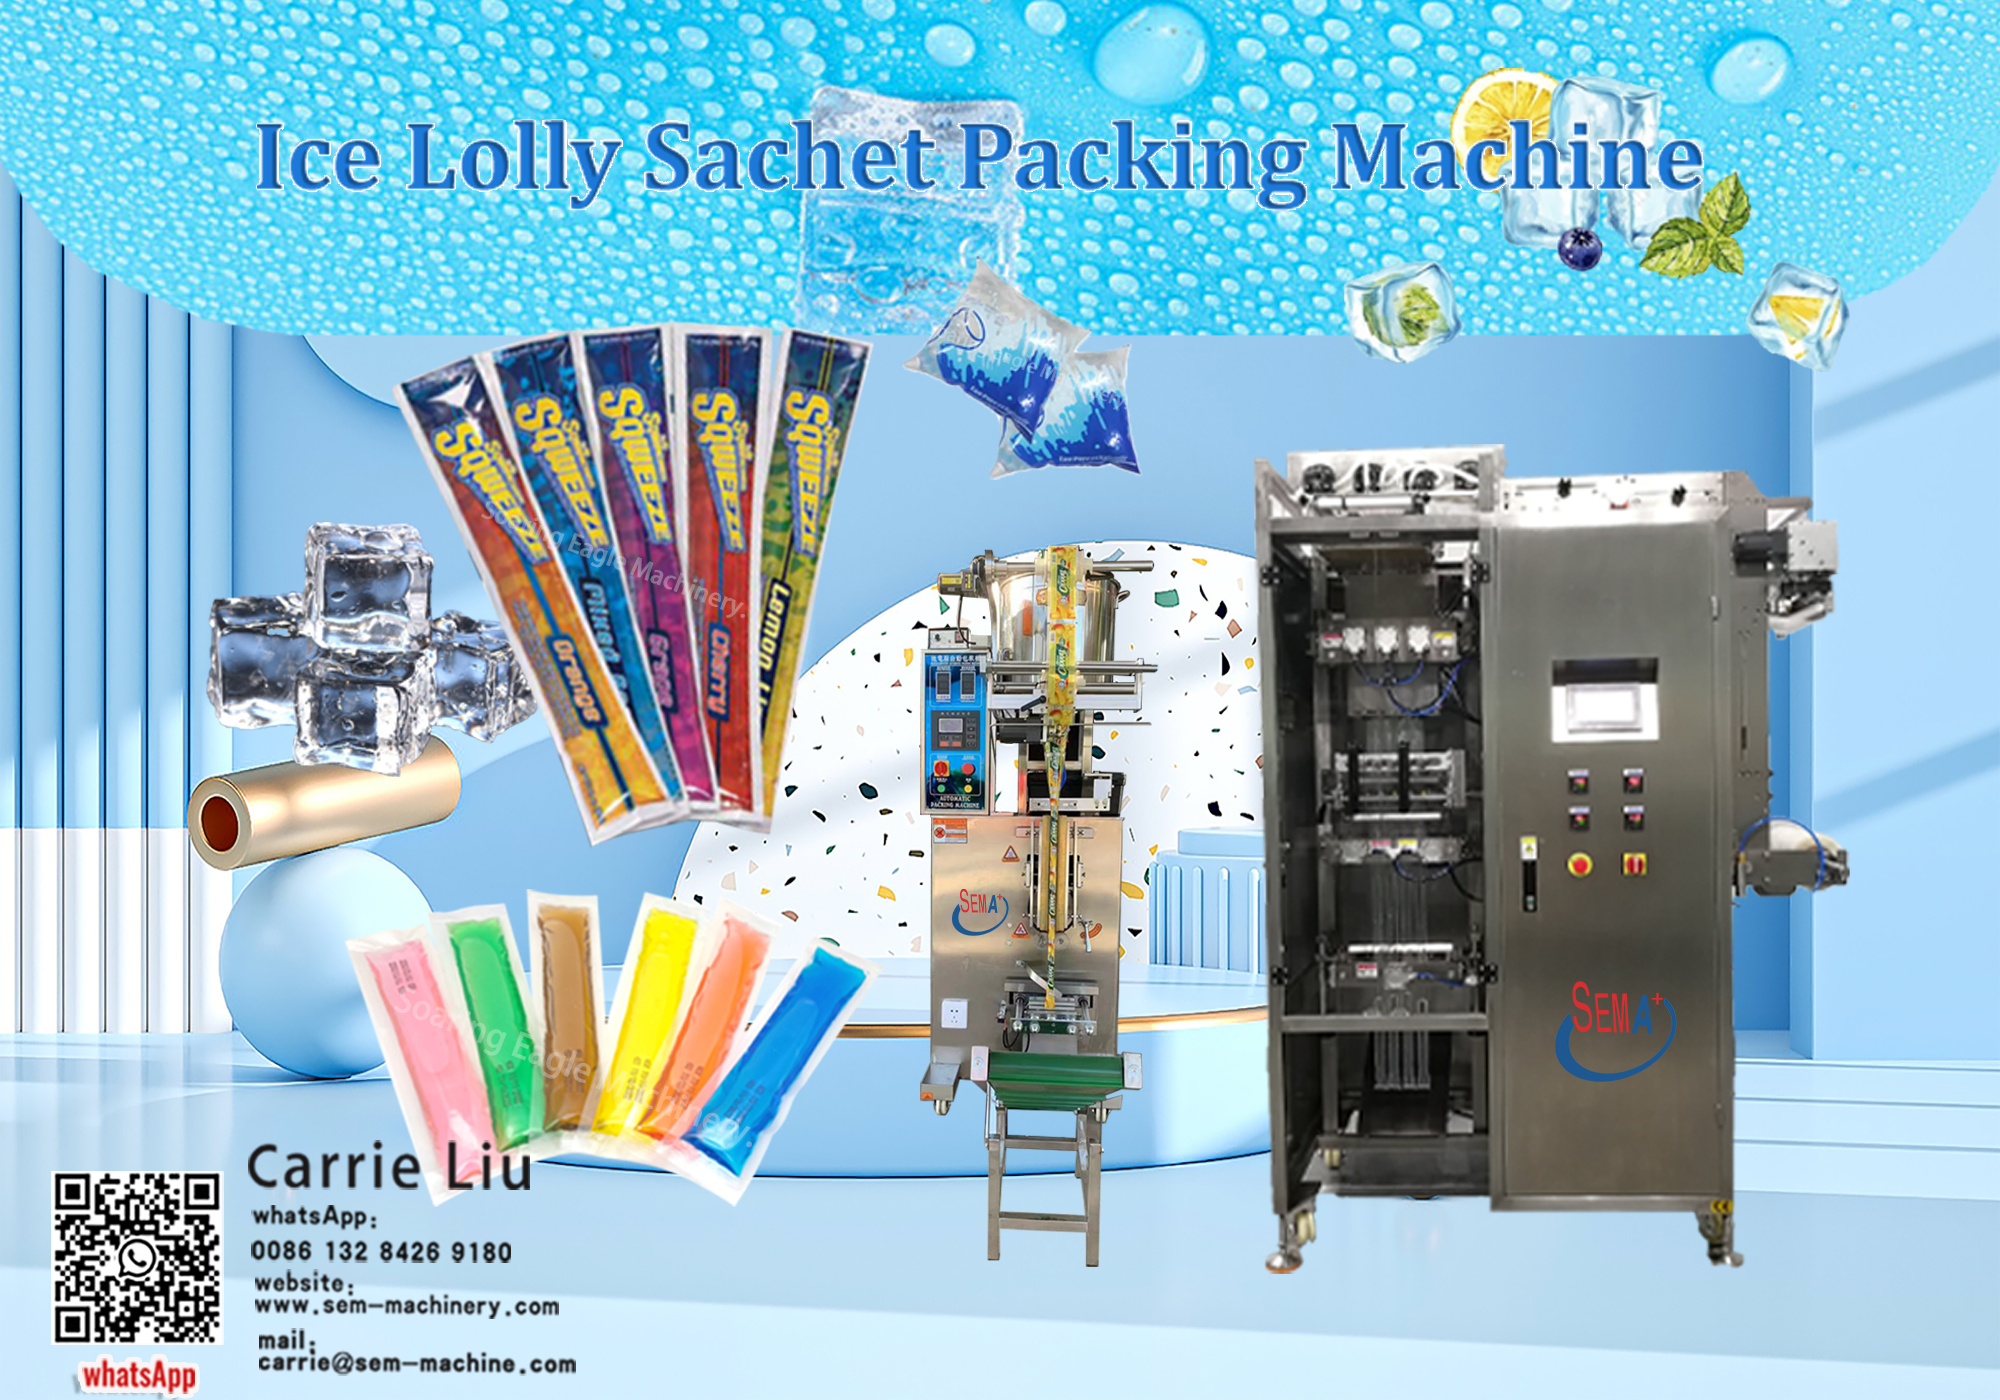 Ice lolly sachet packing machine